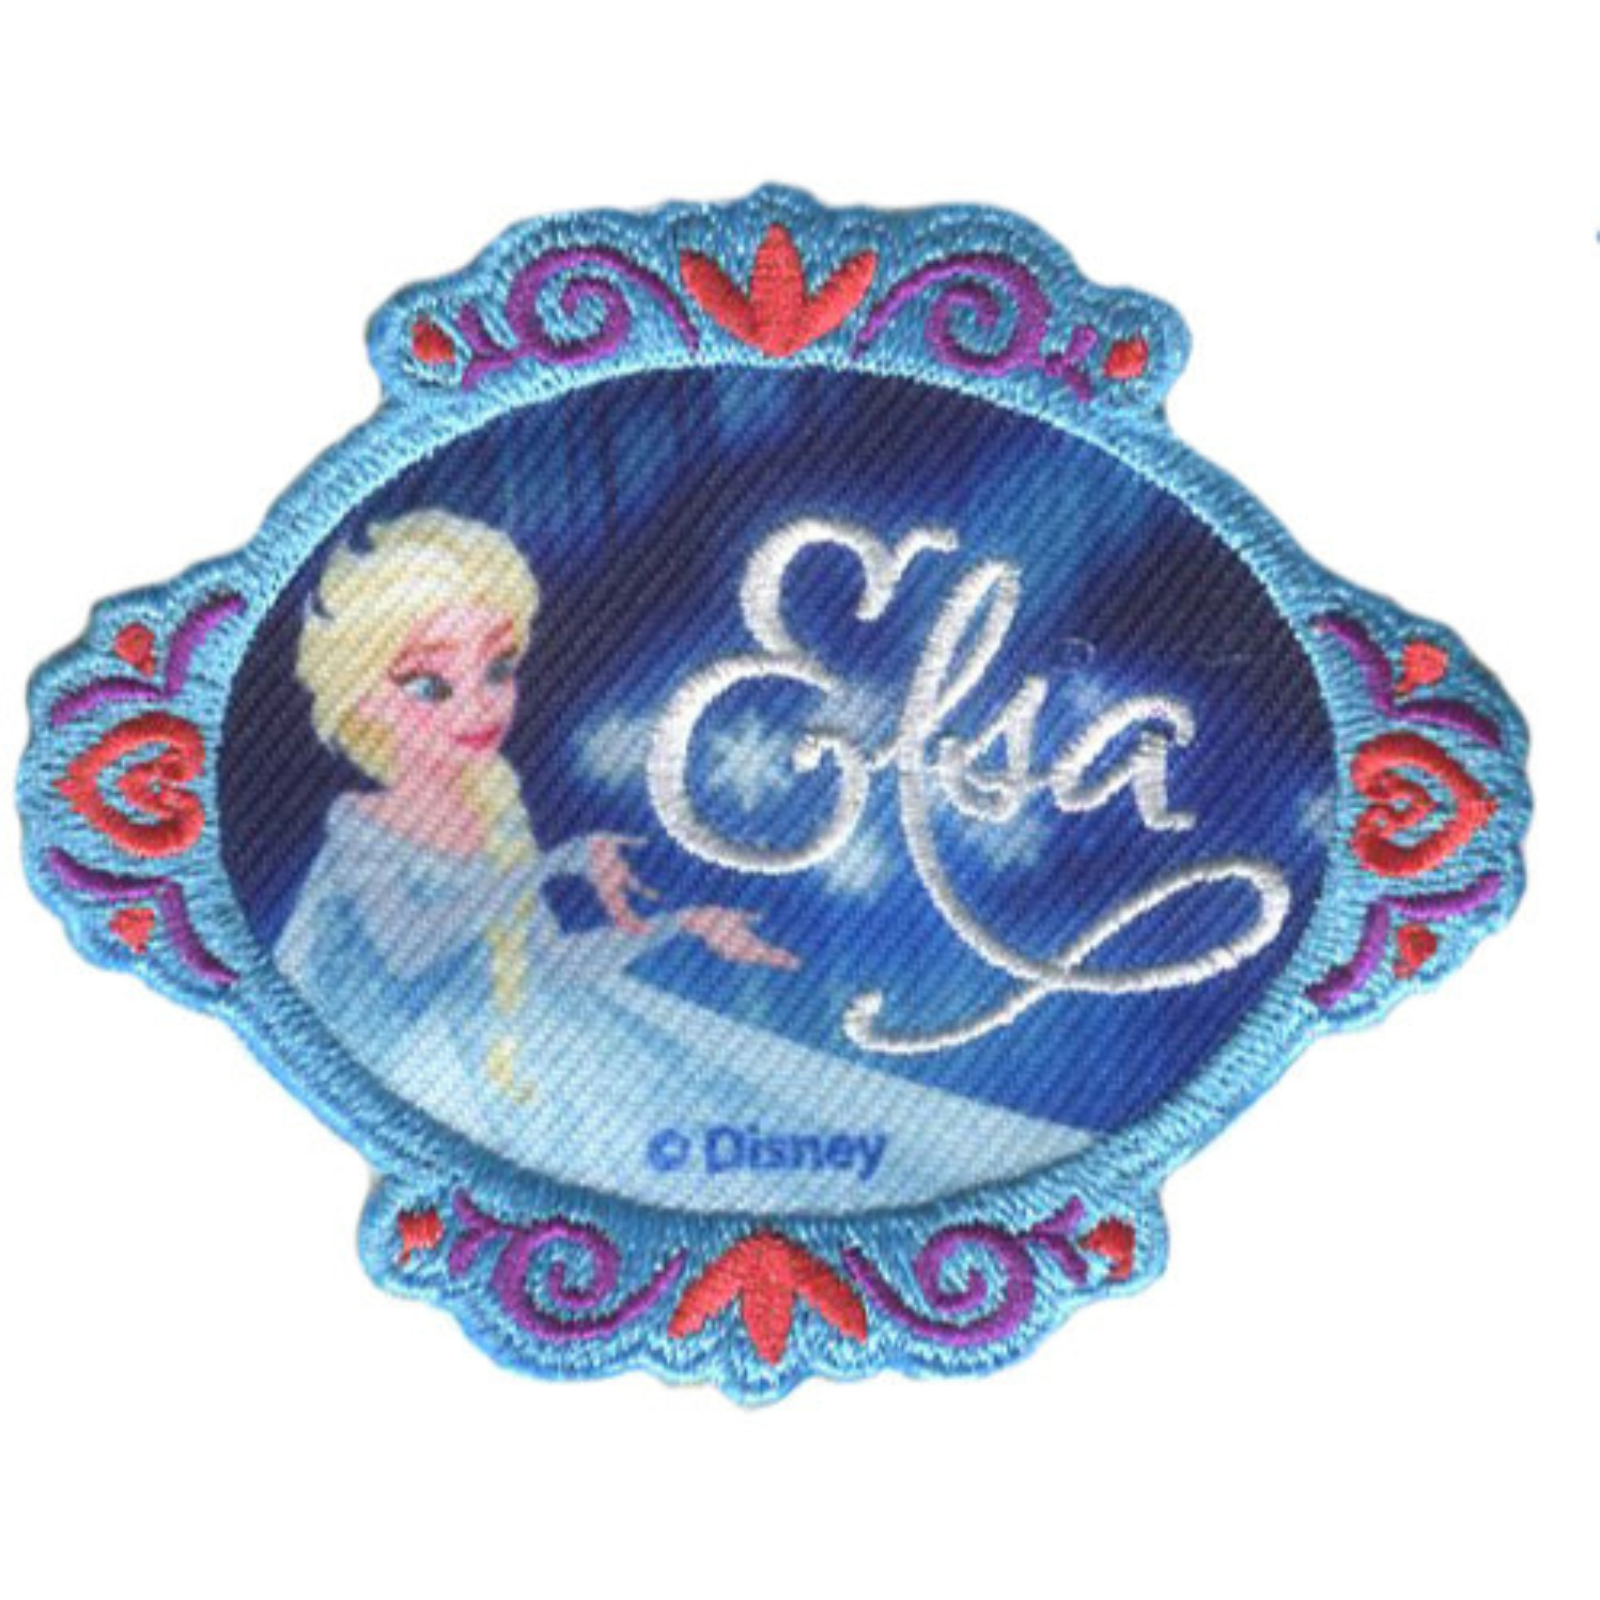 Official Disney Frozen Princess Applique Patch Badge Elsa Olaf Iron On Small